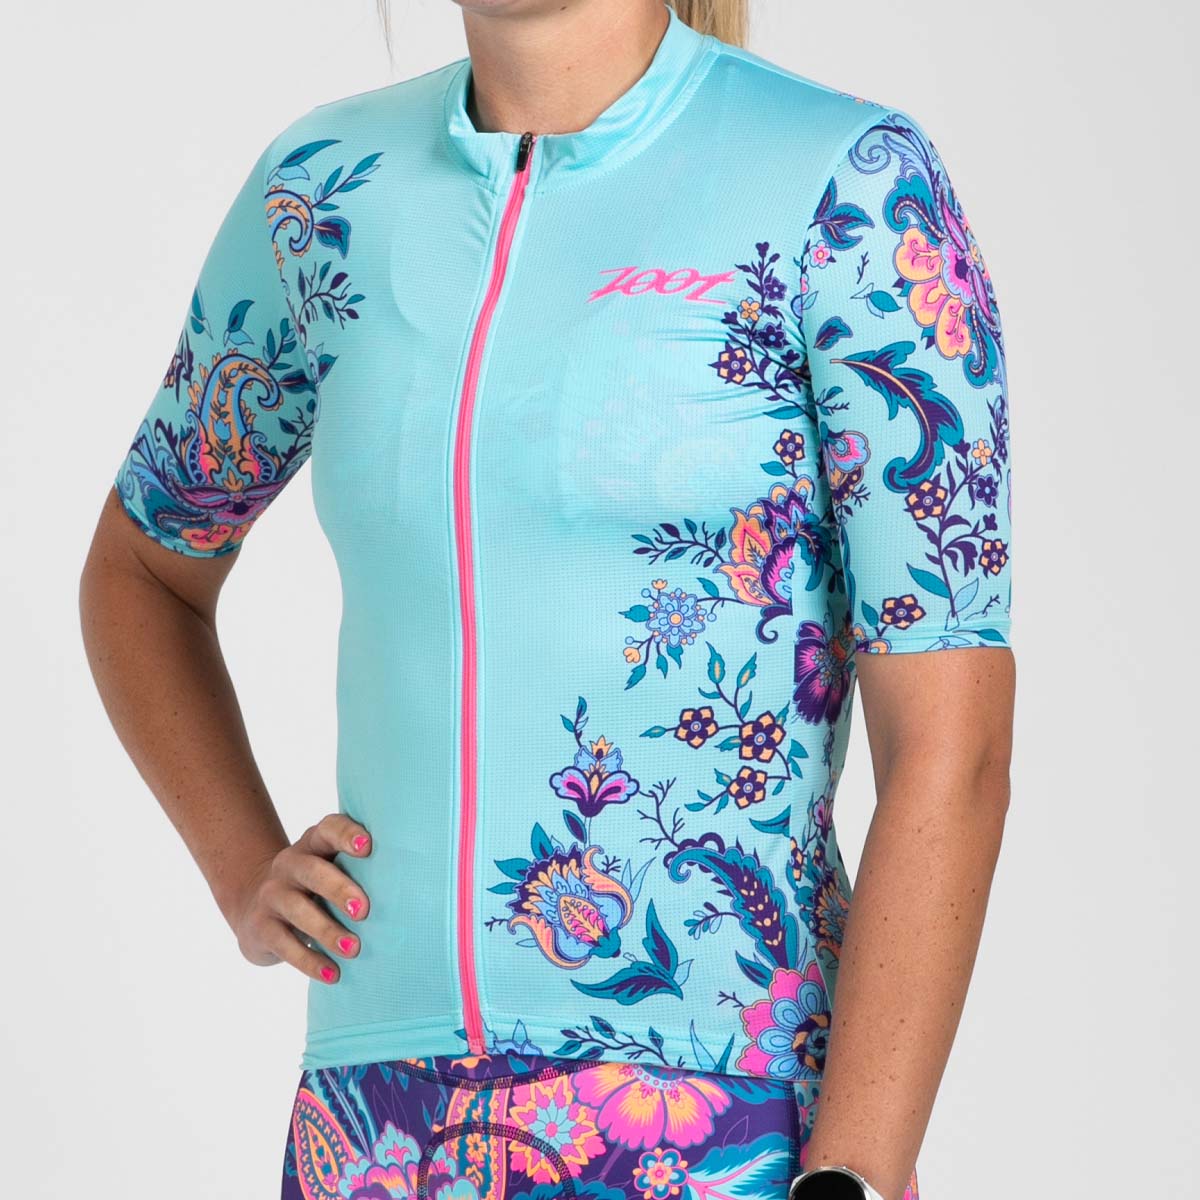 Zoot Sports CYCLE JERSEYS Women's Ltd Cycle Aero Jersey With Exposed Zipper - Utopia Blue